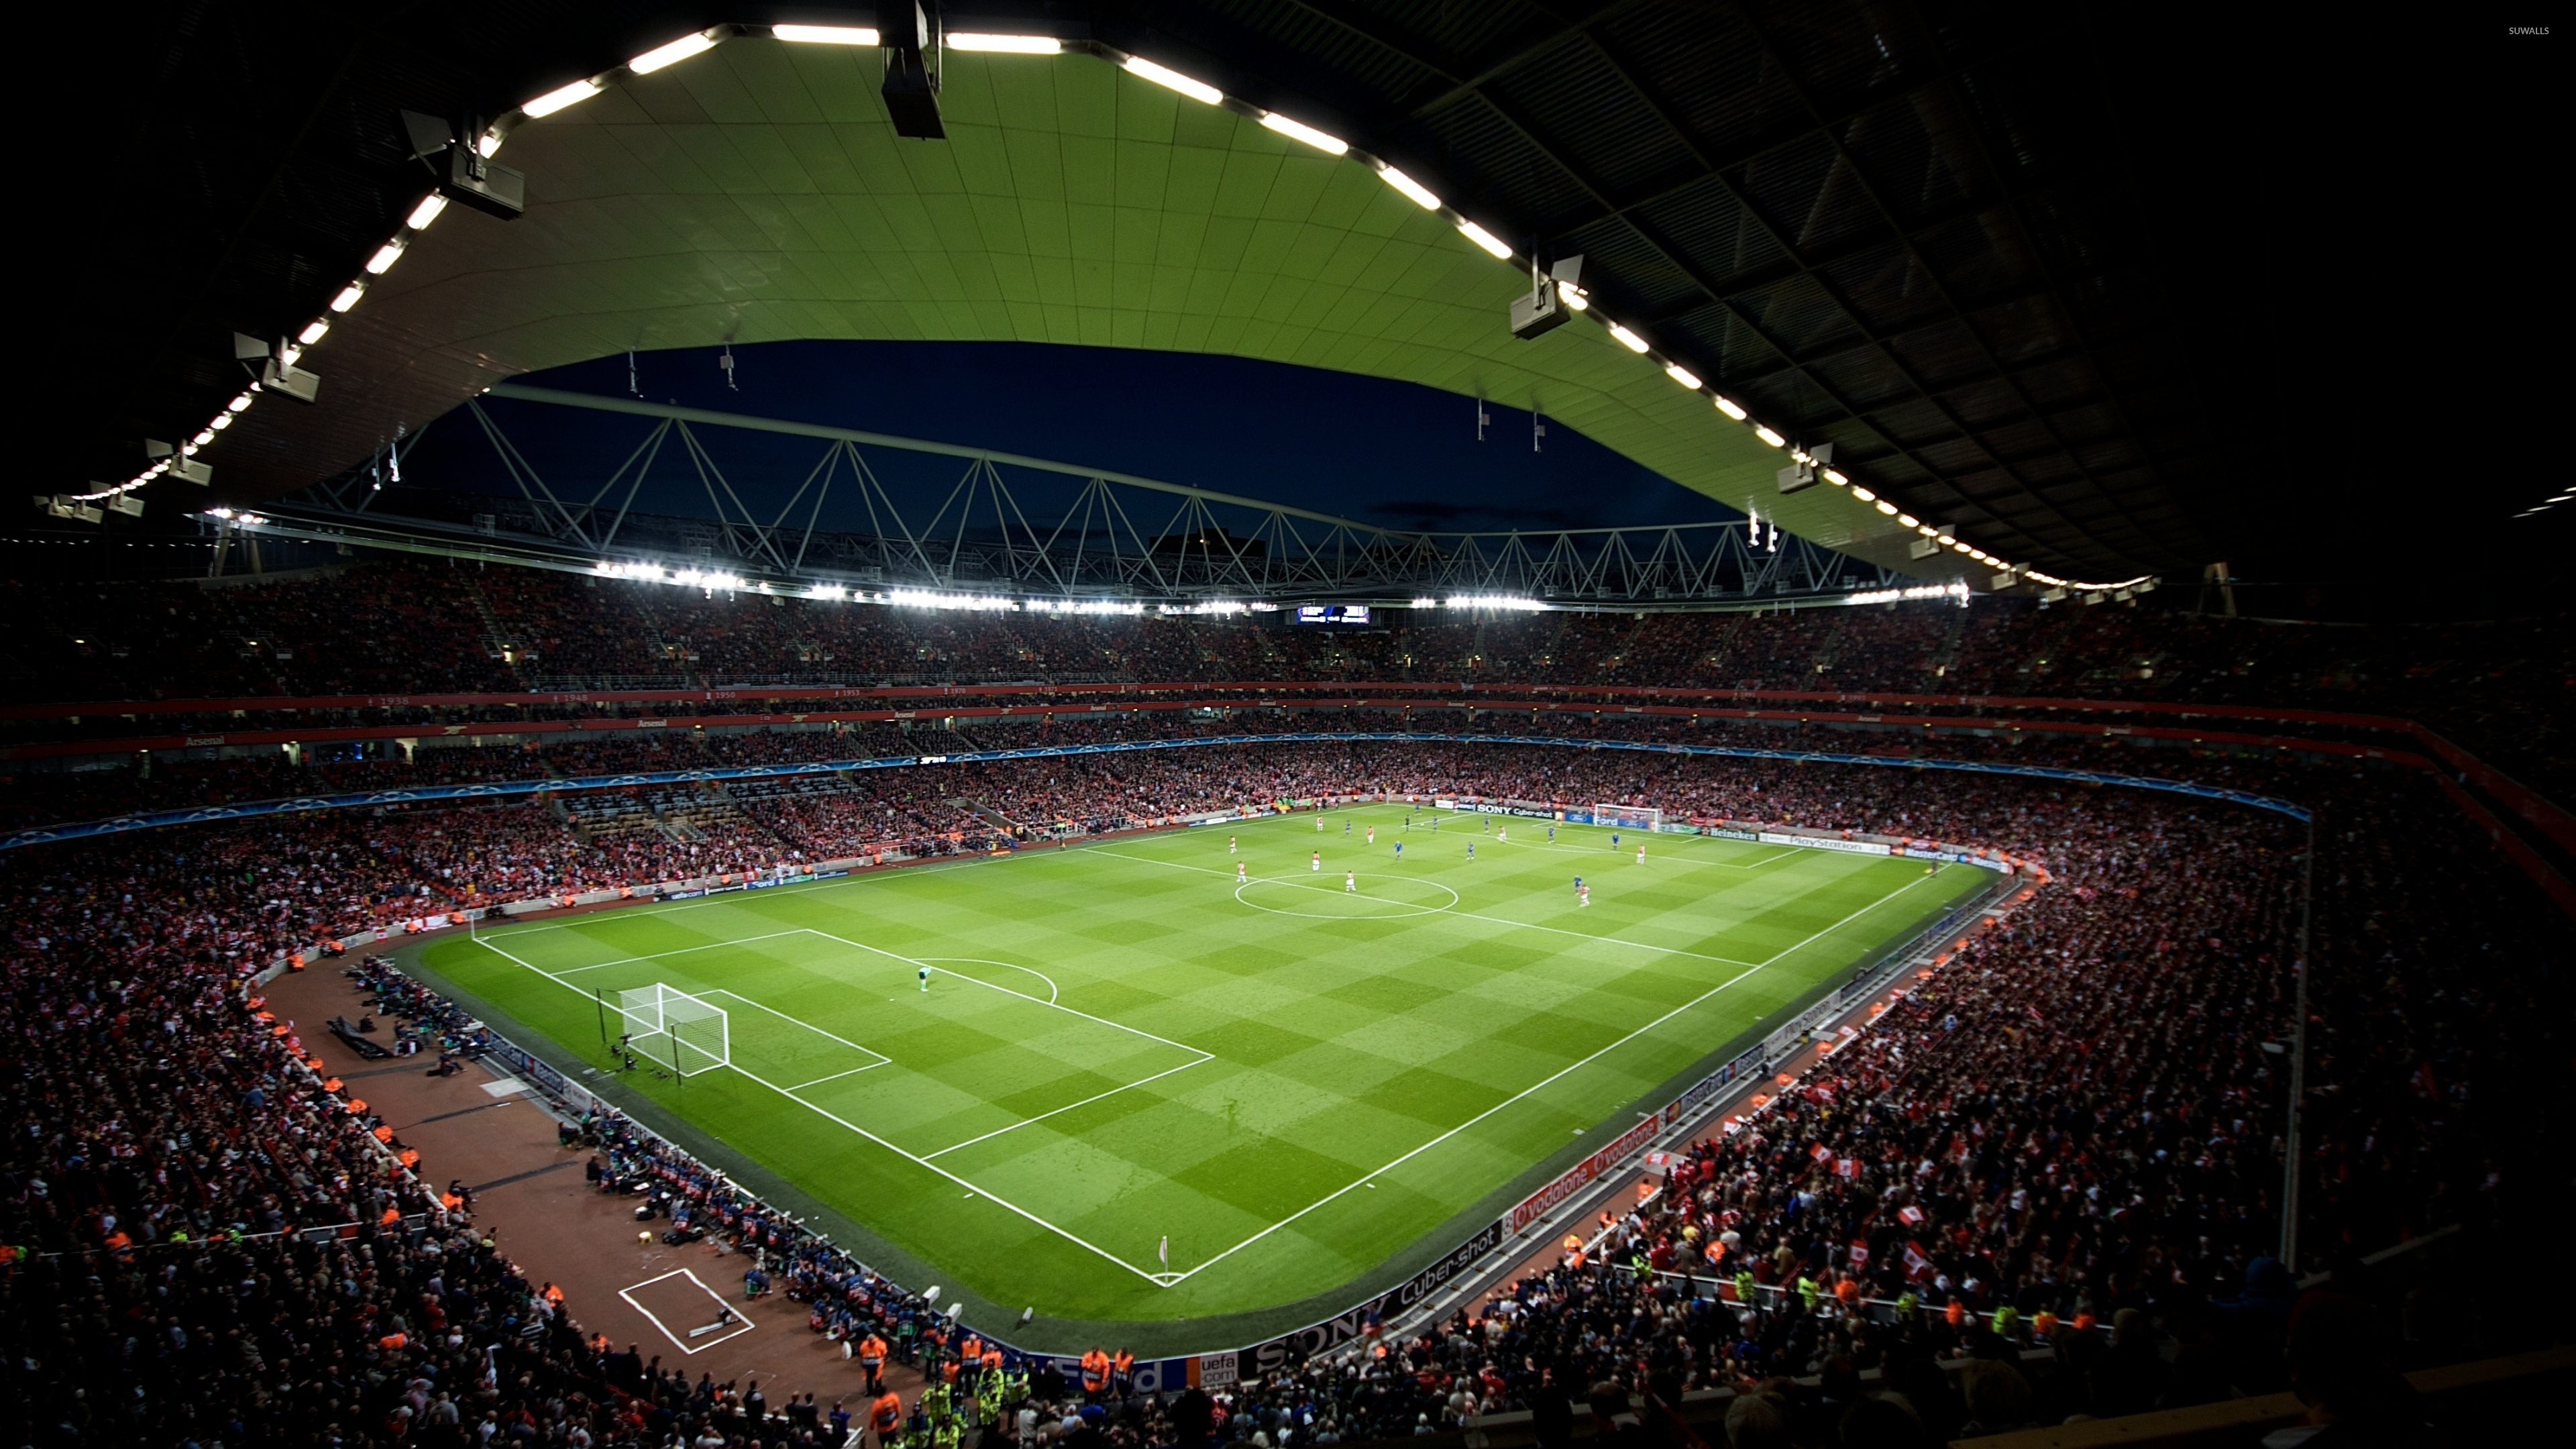 Football stadium, Photography wallpapers, Empty stands, Spectator's view, 3840x2160 4K Desktop